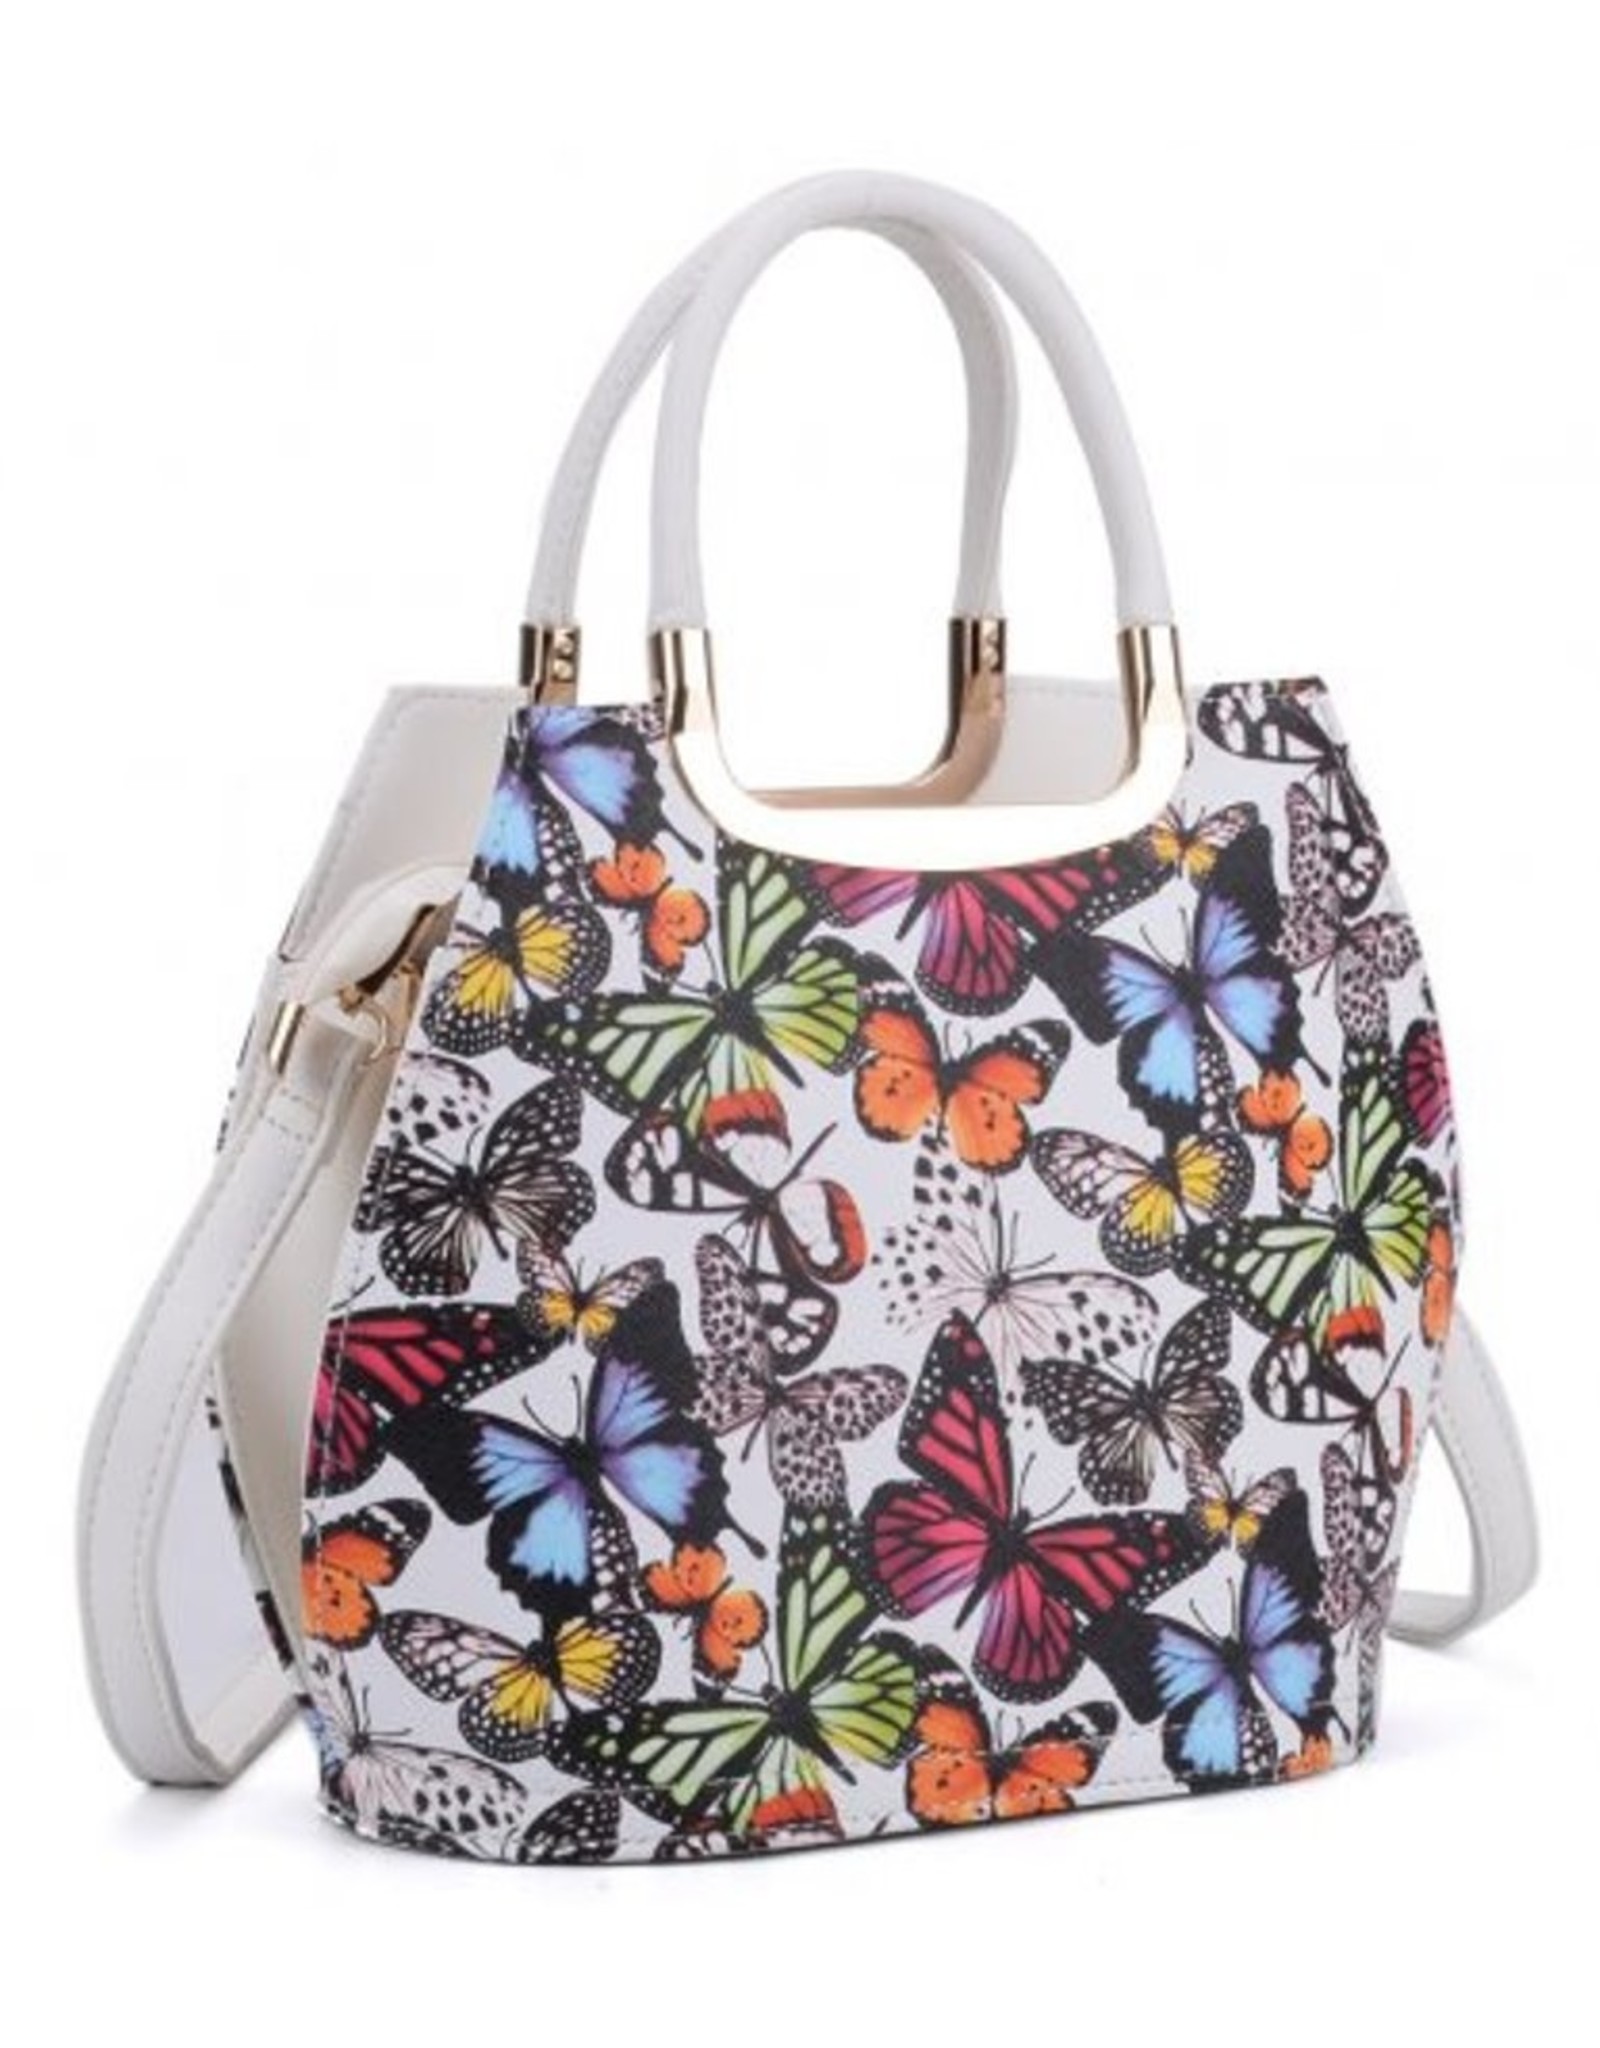 Trukado Fashion bags - Fashionable Handbag with Exotic Butterflies Butterfly white